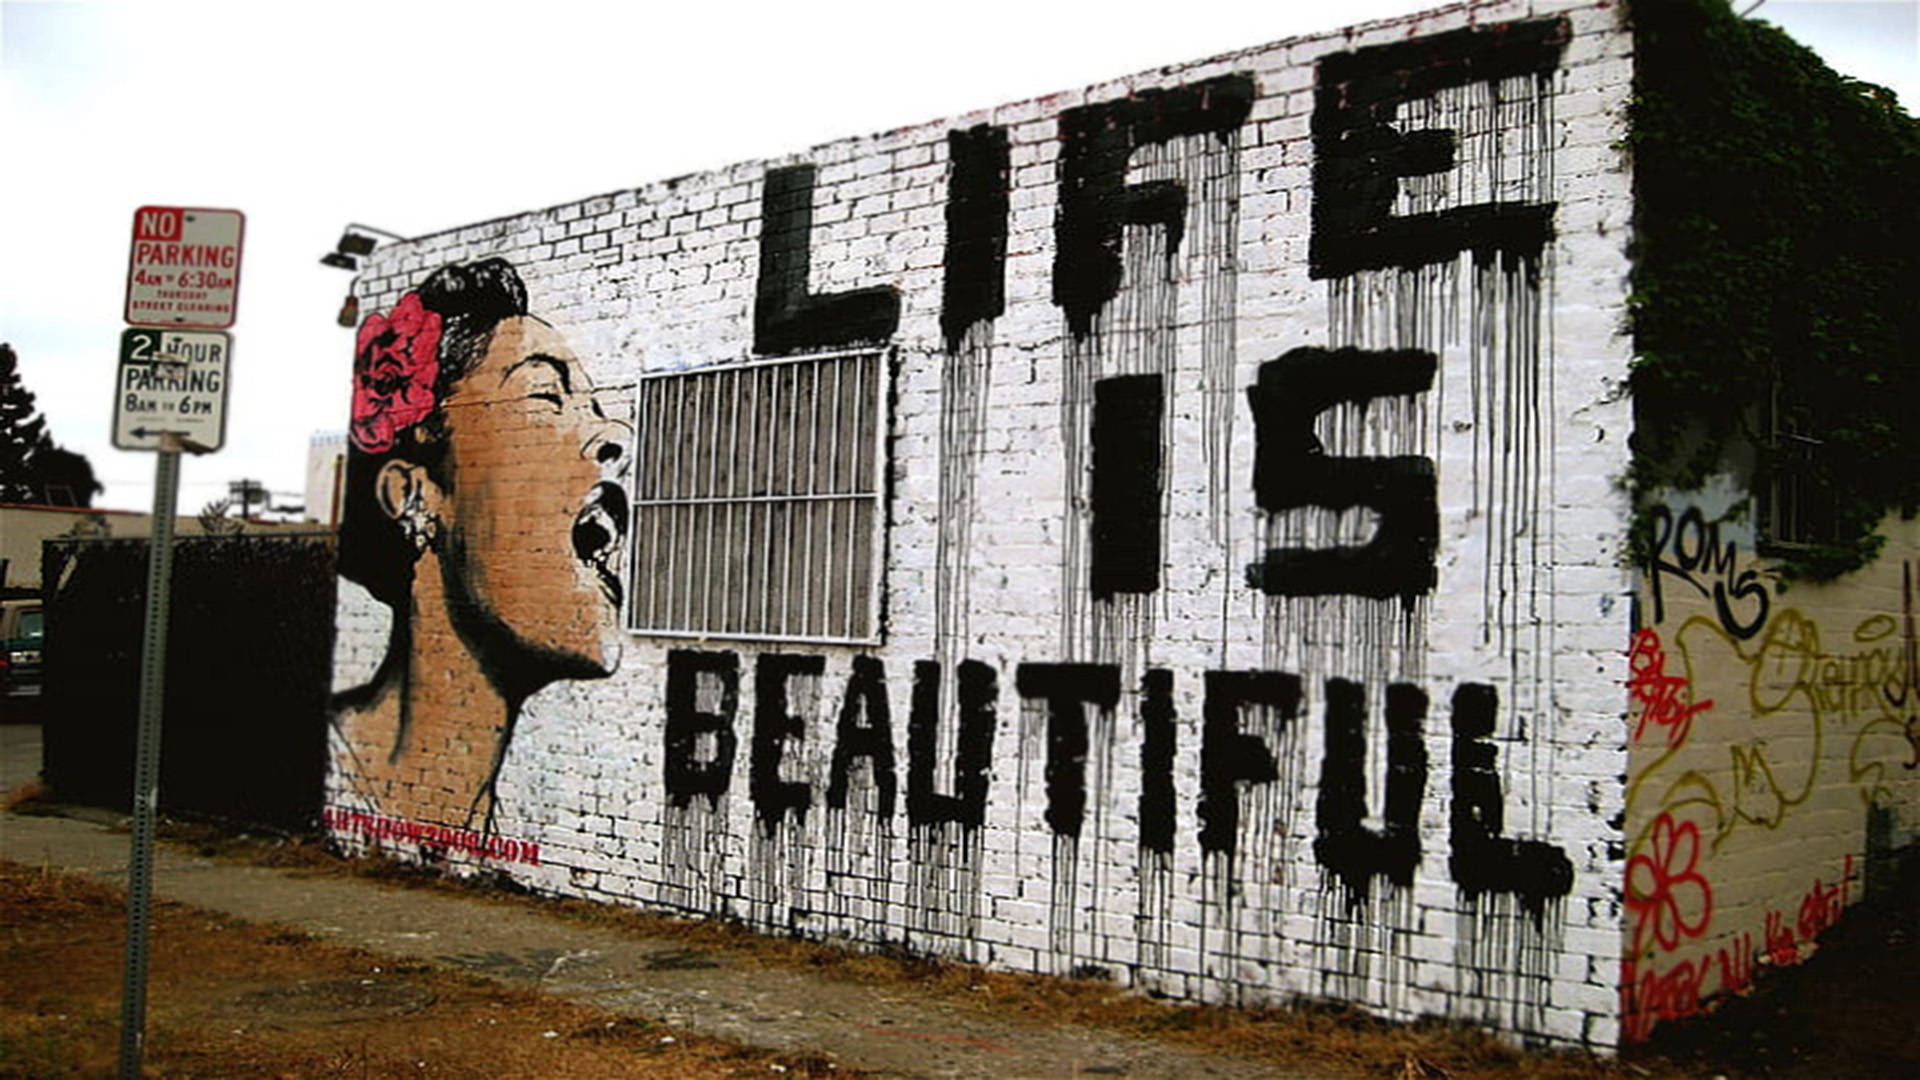 Banksy's Vibrant Life Is Beautiful Street Art Mural Background